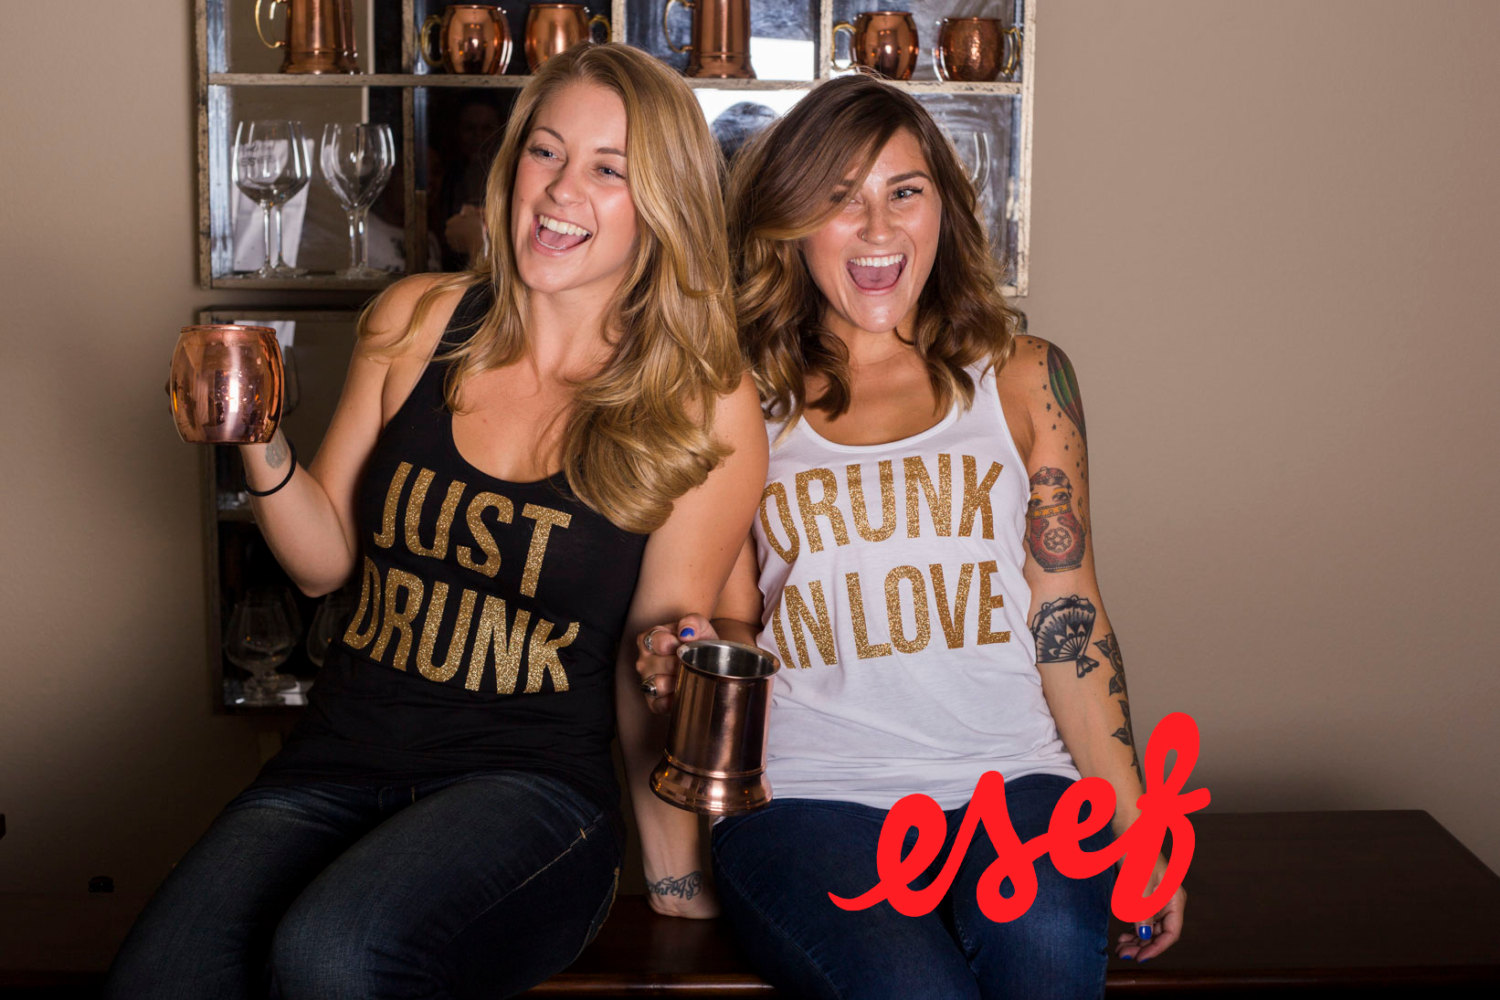 just drunk drunk in love bachelorette party tanks by esf apparel | fun bachelorette party ideas | https://emmalinebride.com/planning/fun-bachelorette-party-ideas/